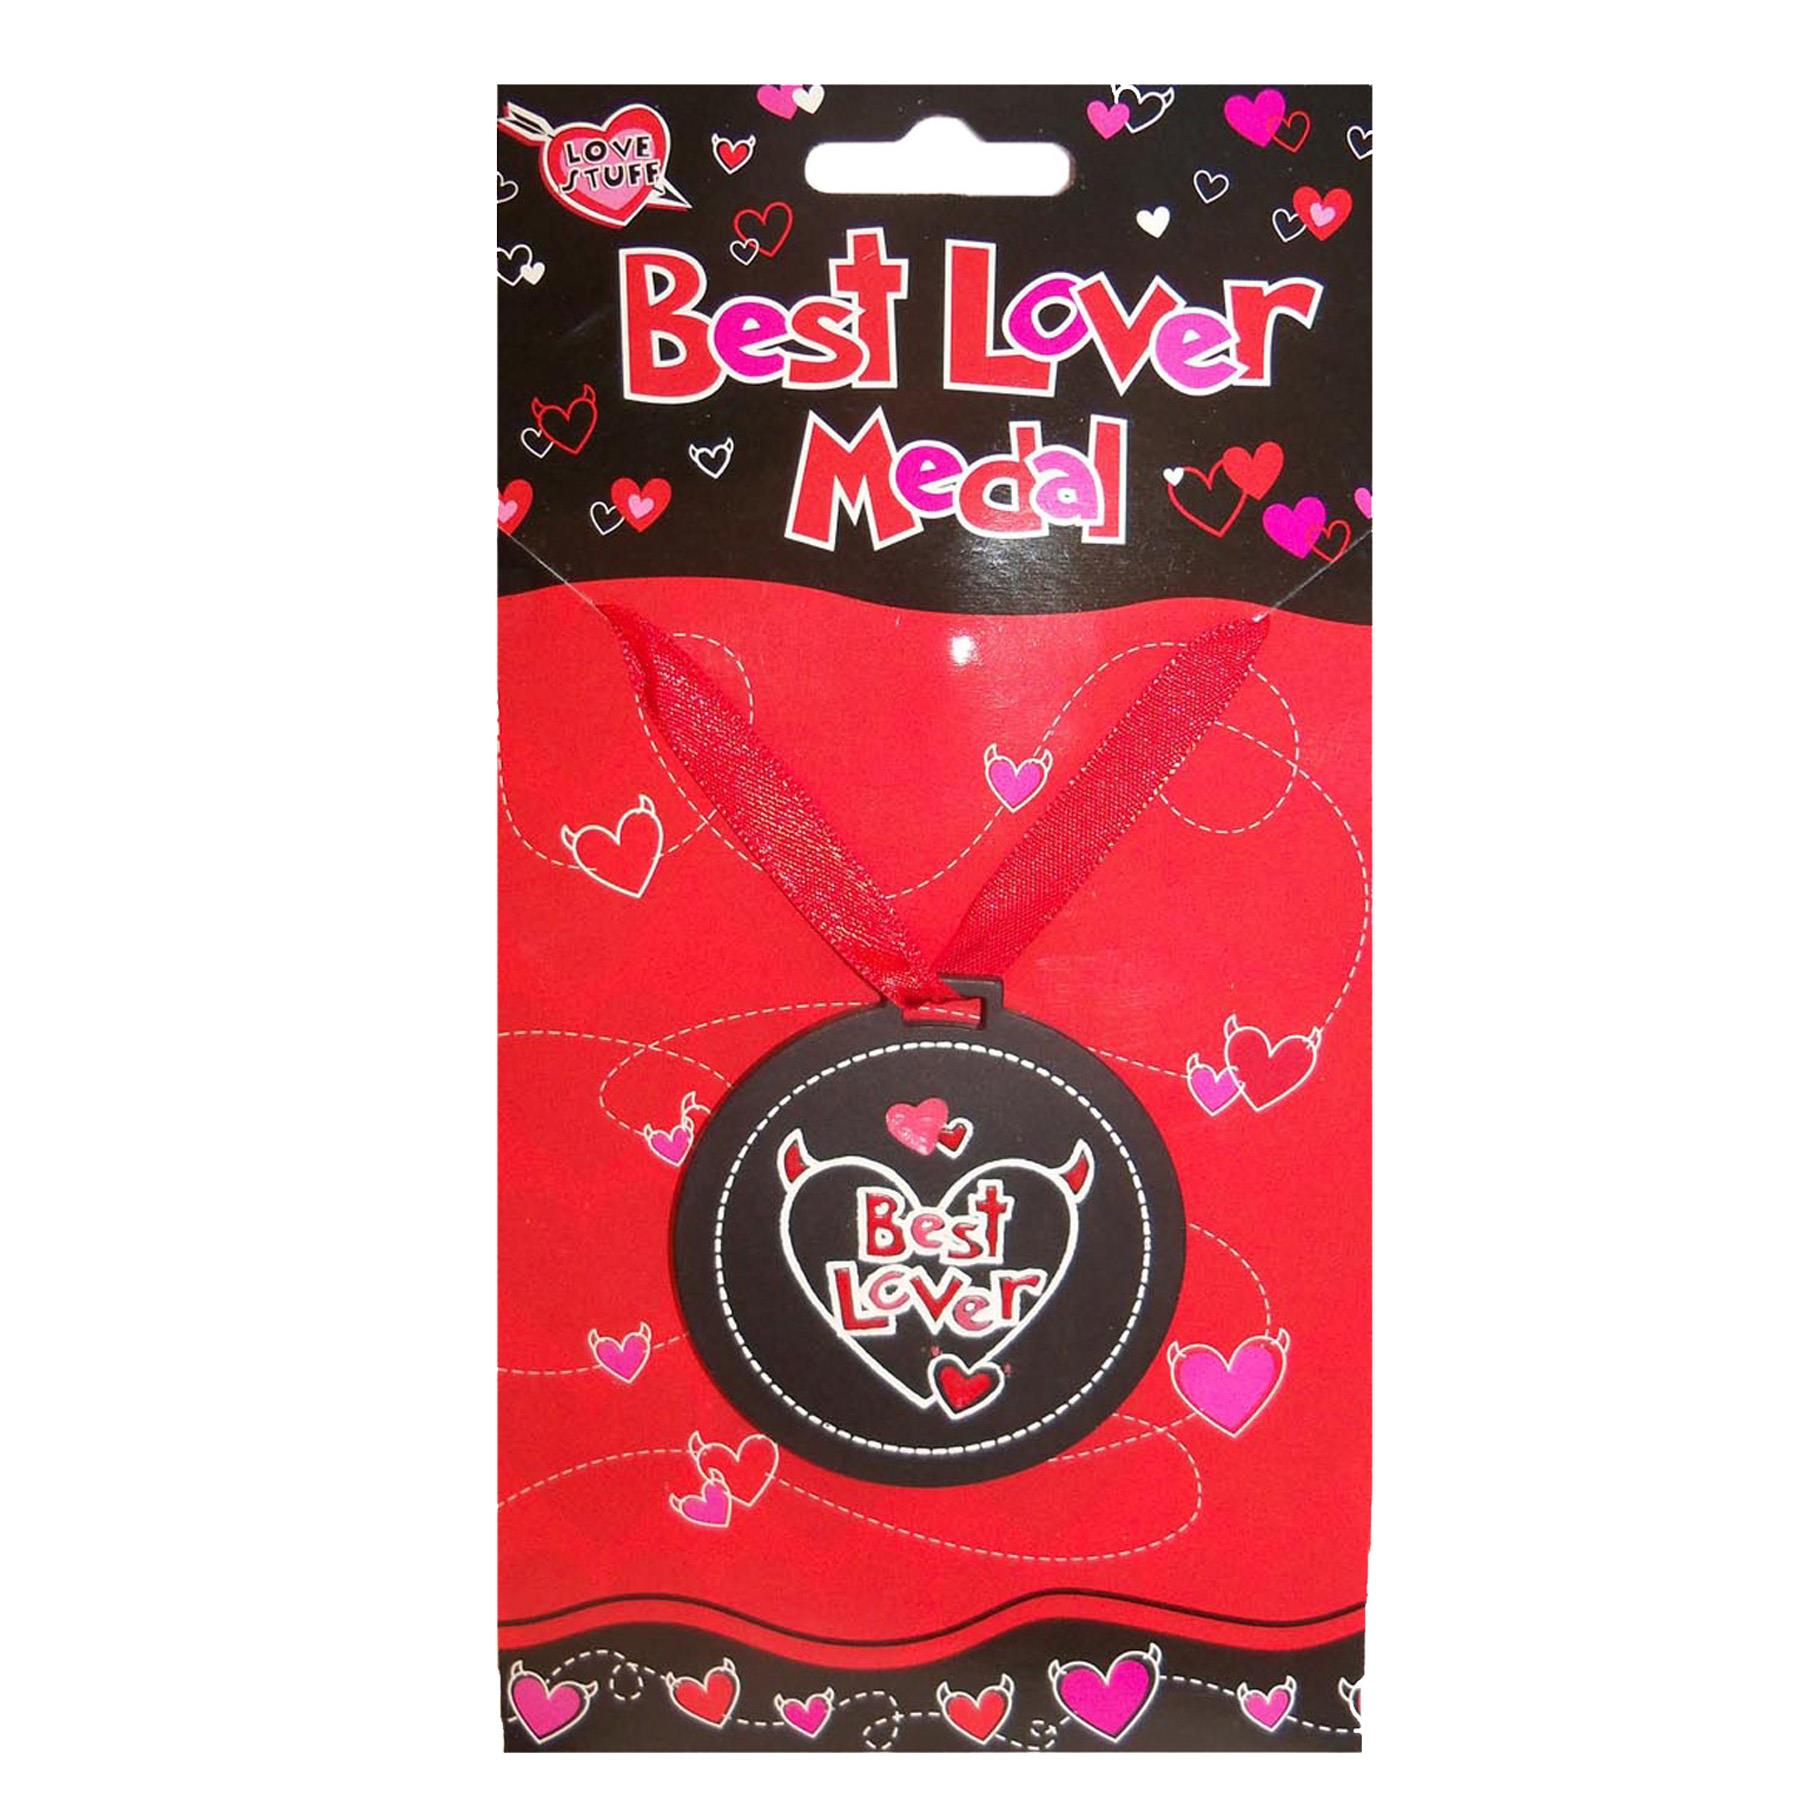 Valentine’s Day Fun Novelty Gift - Best Lover Medal